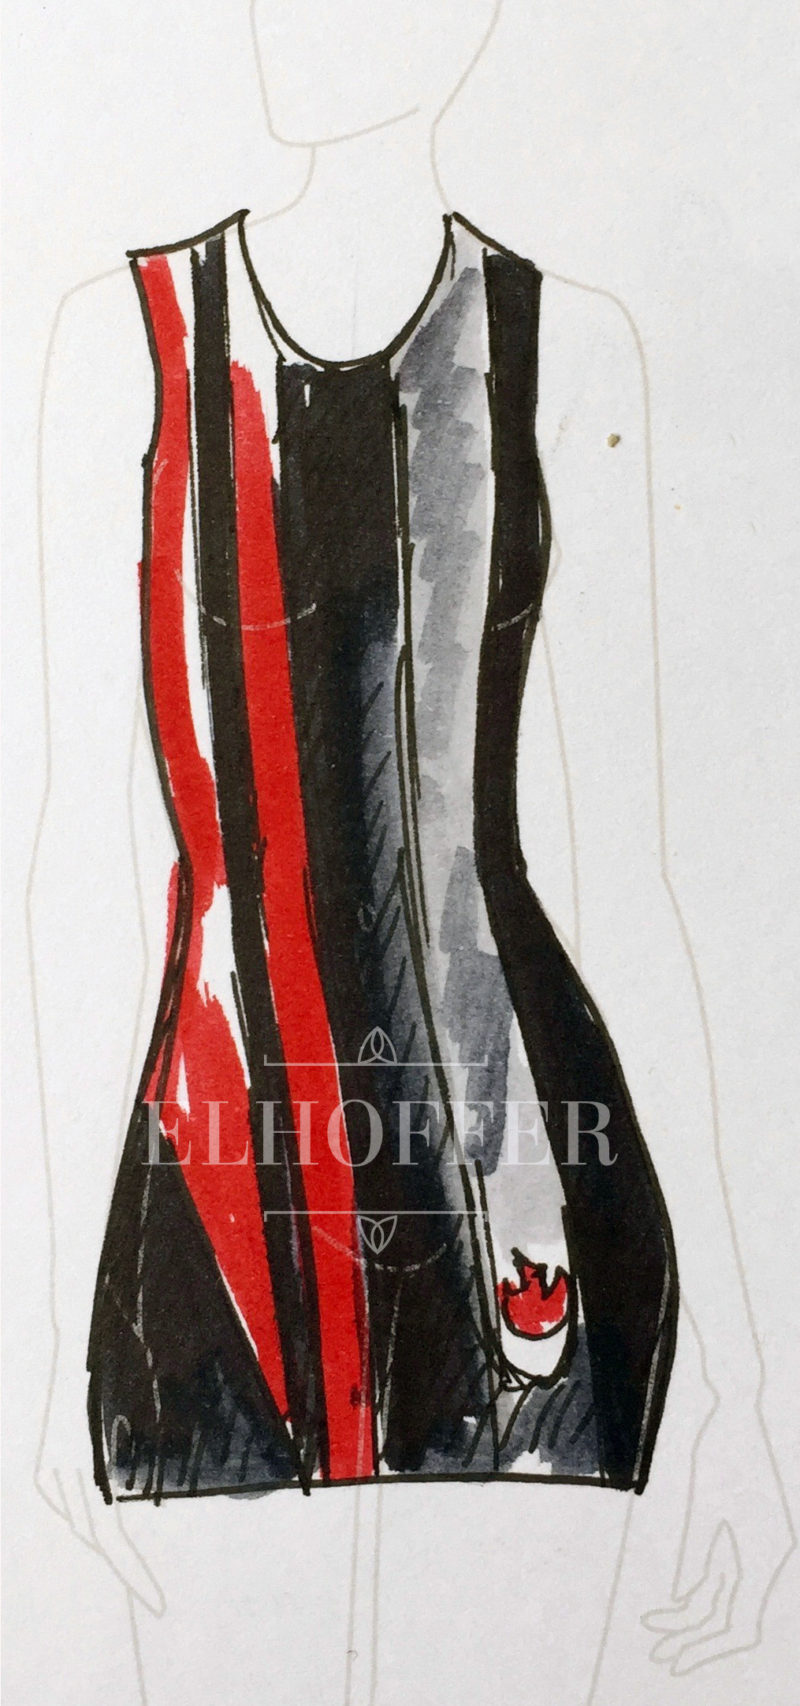 Elhoffer Design - Poe Dameron inspired dress concept sketch